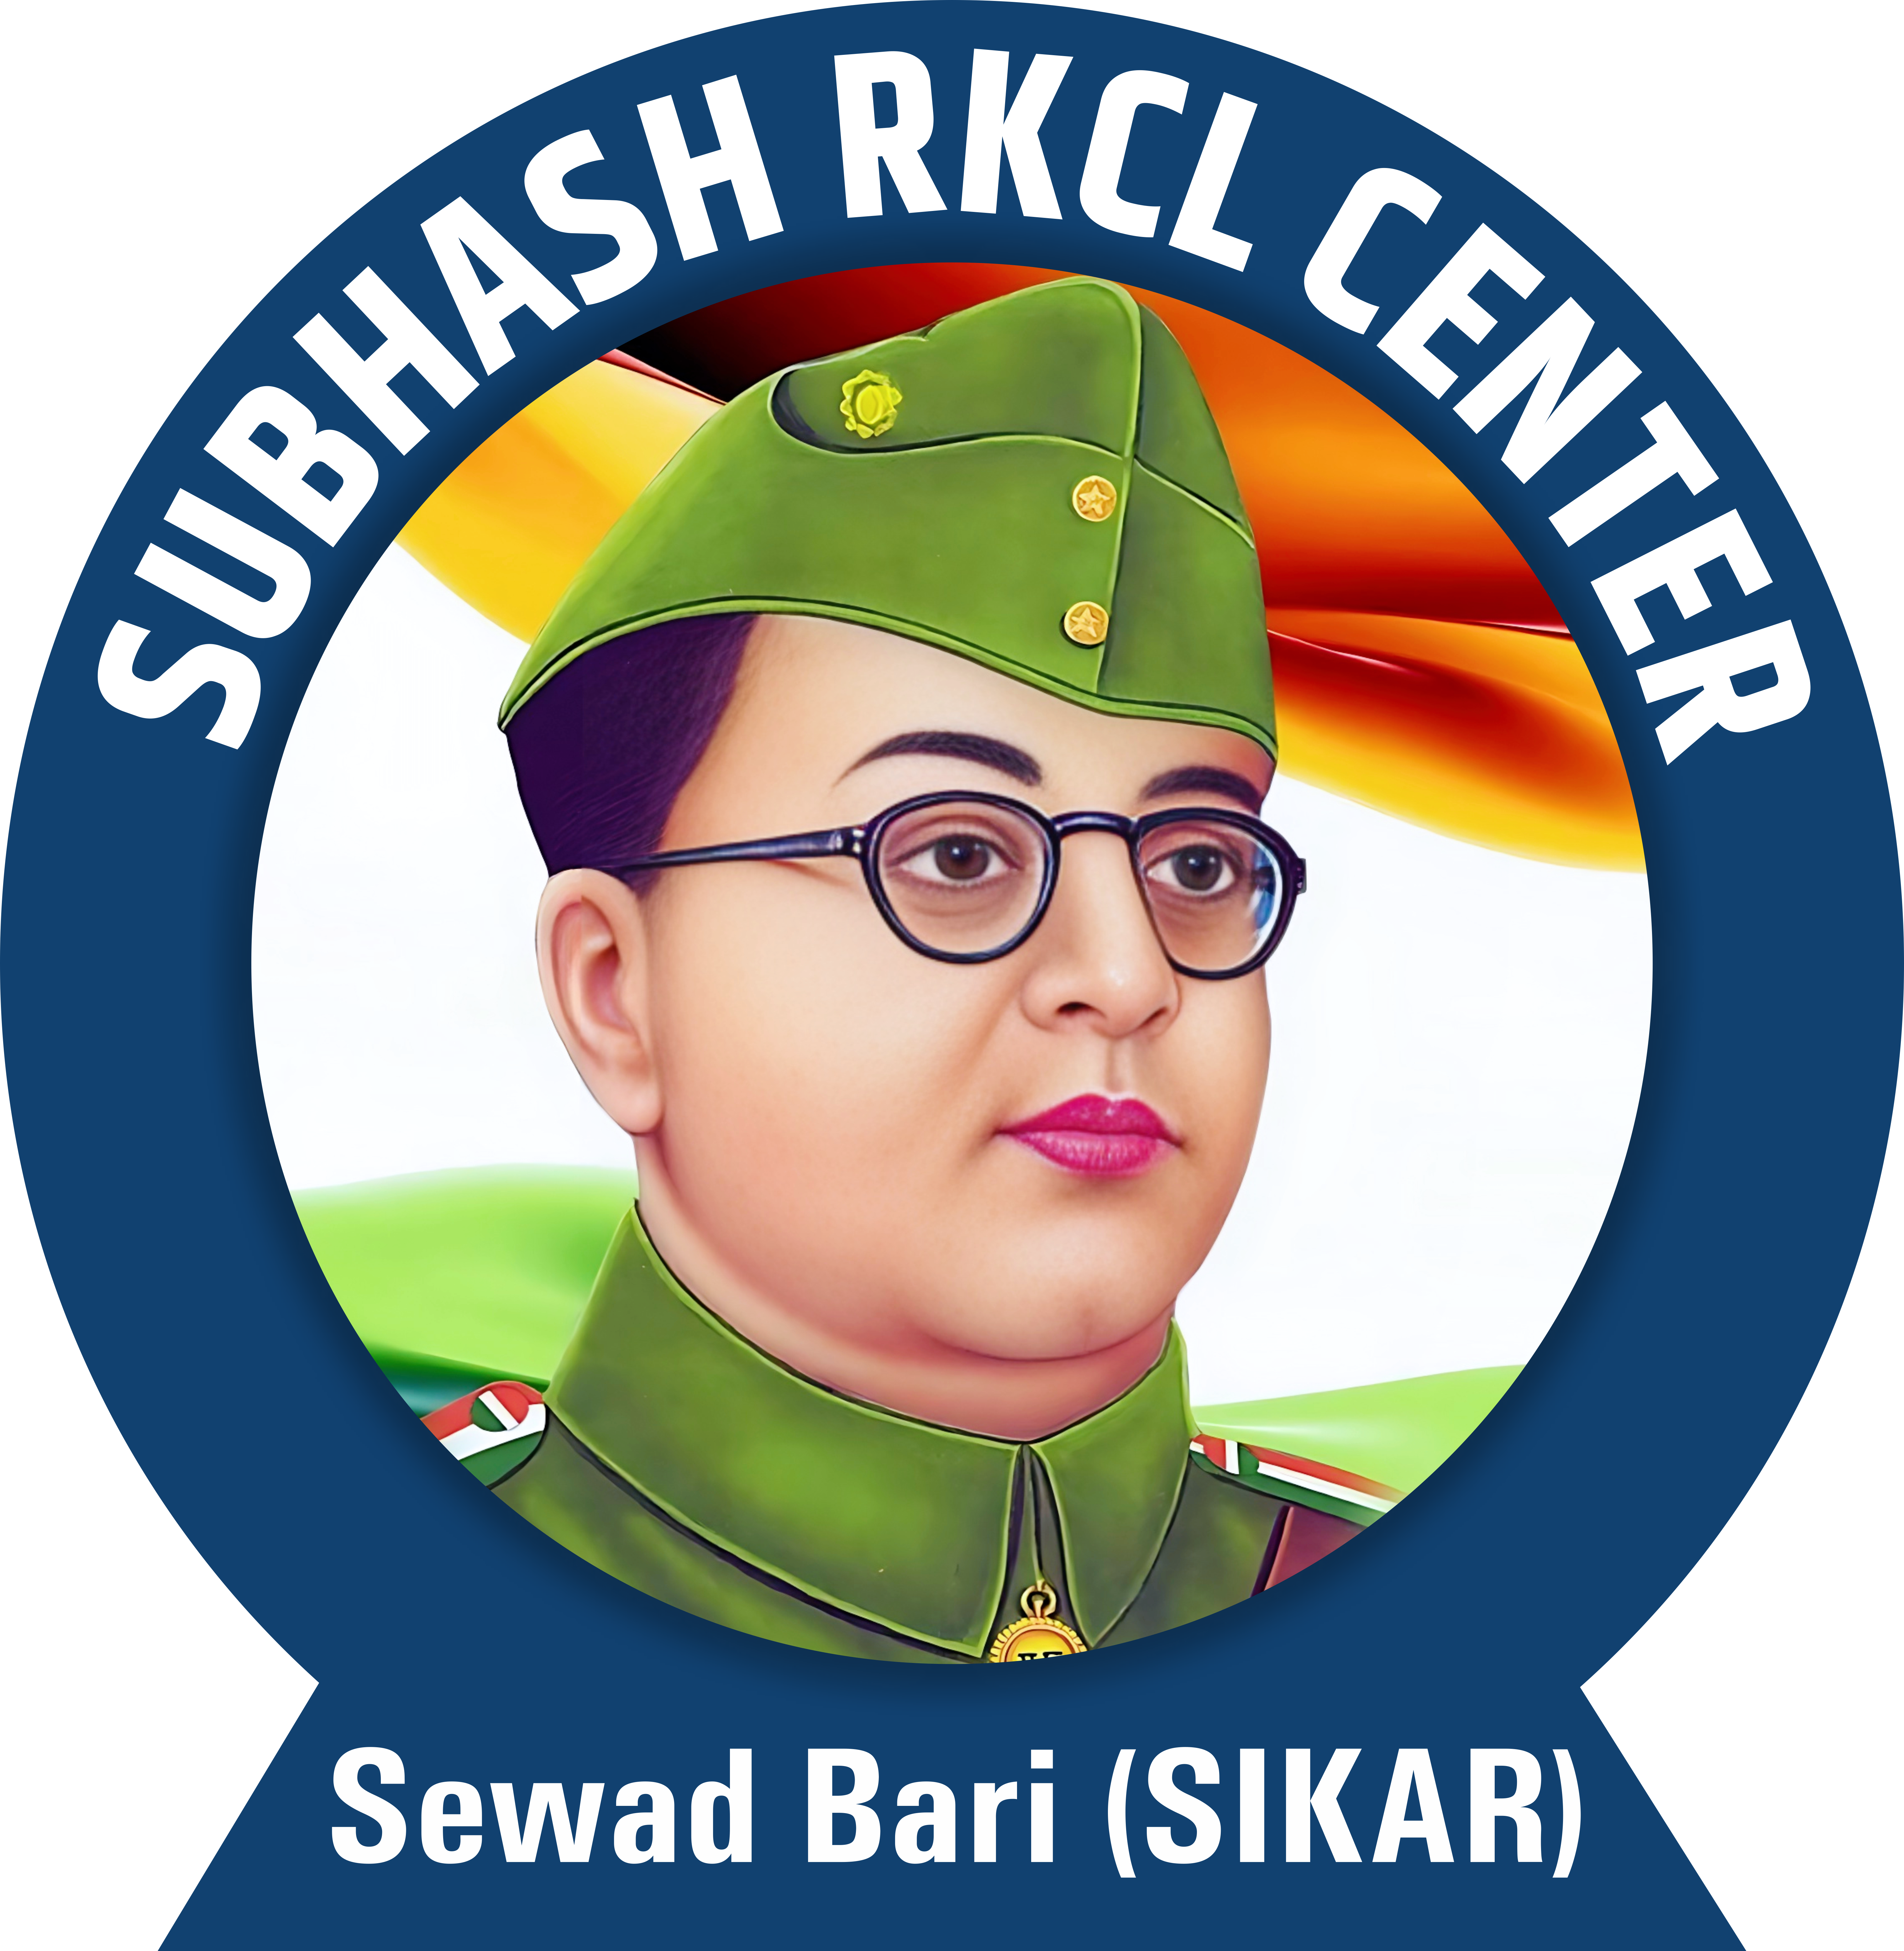 SUBHASH RKCL CENTER